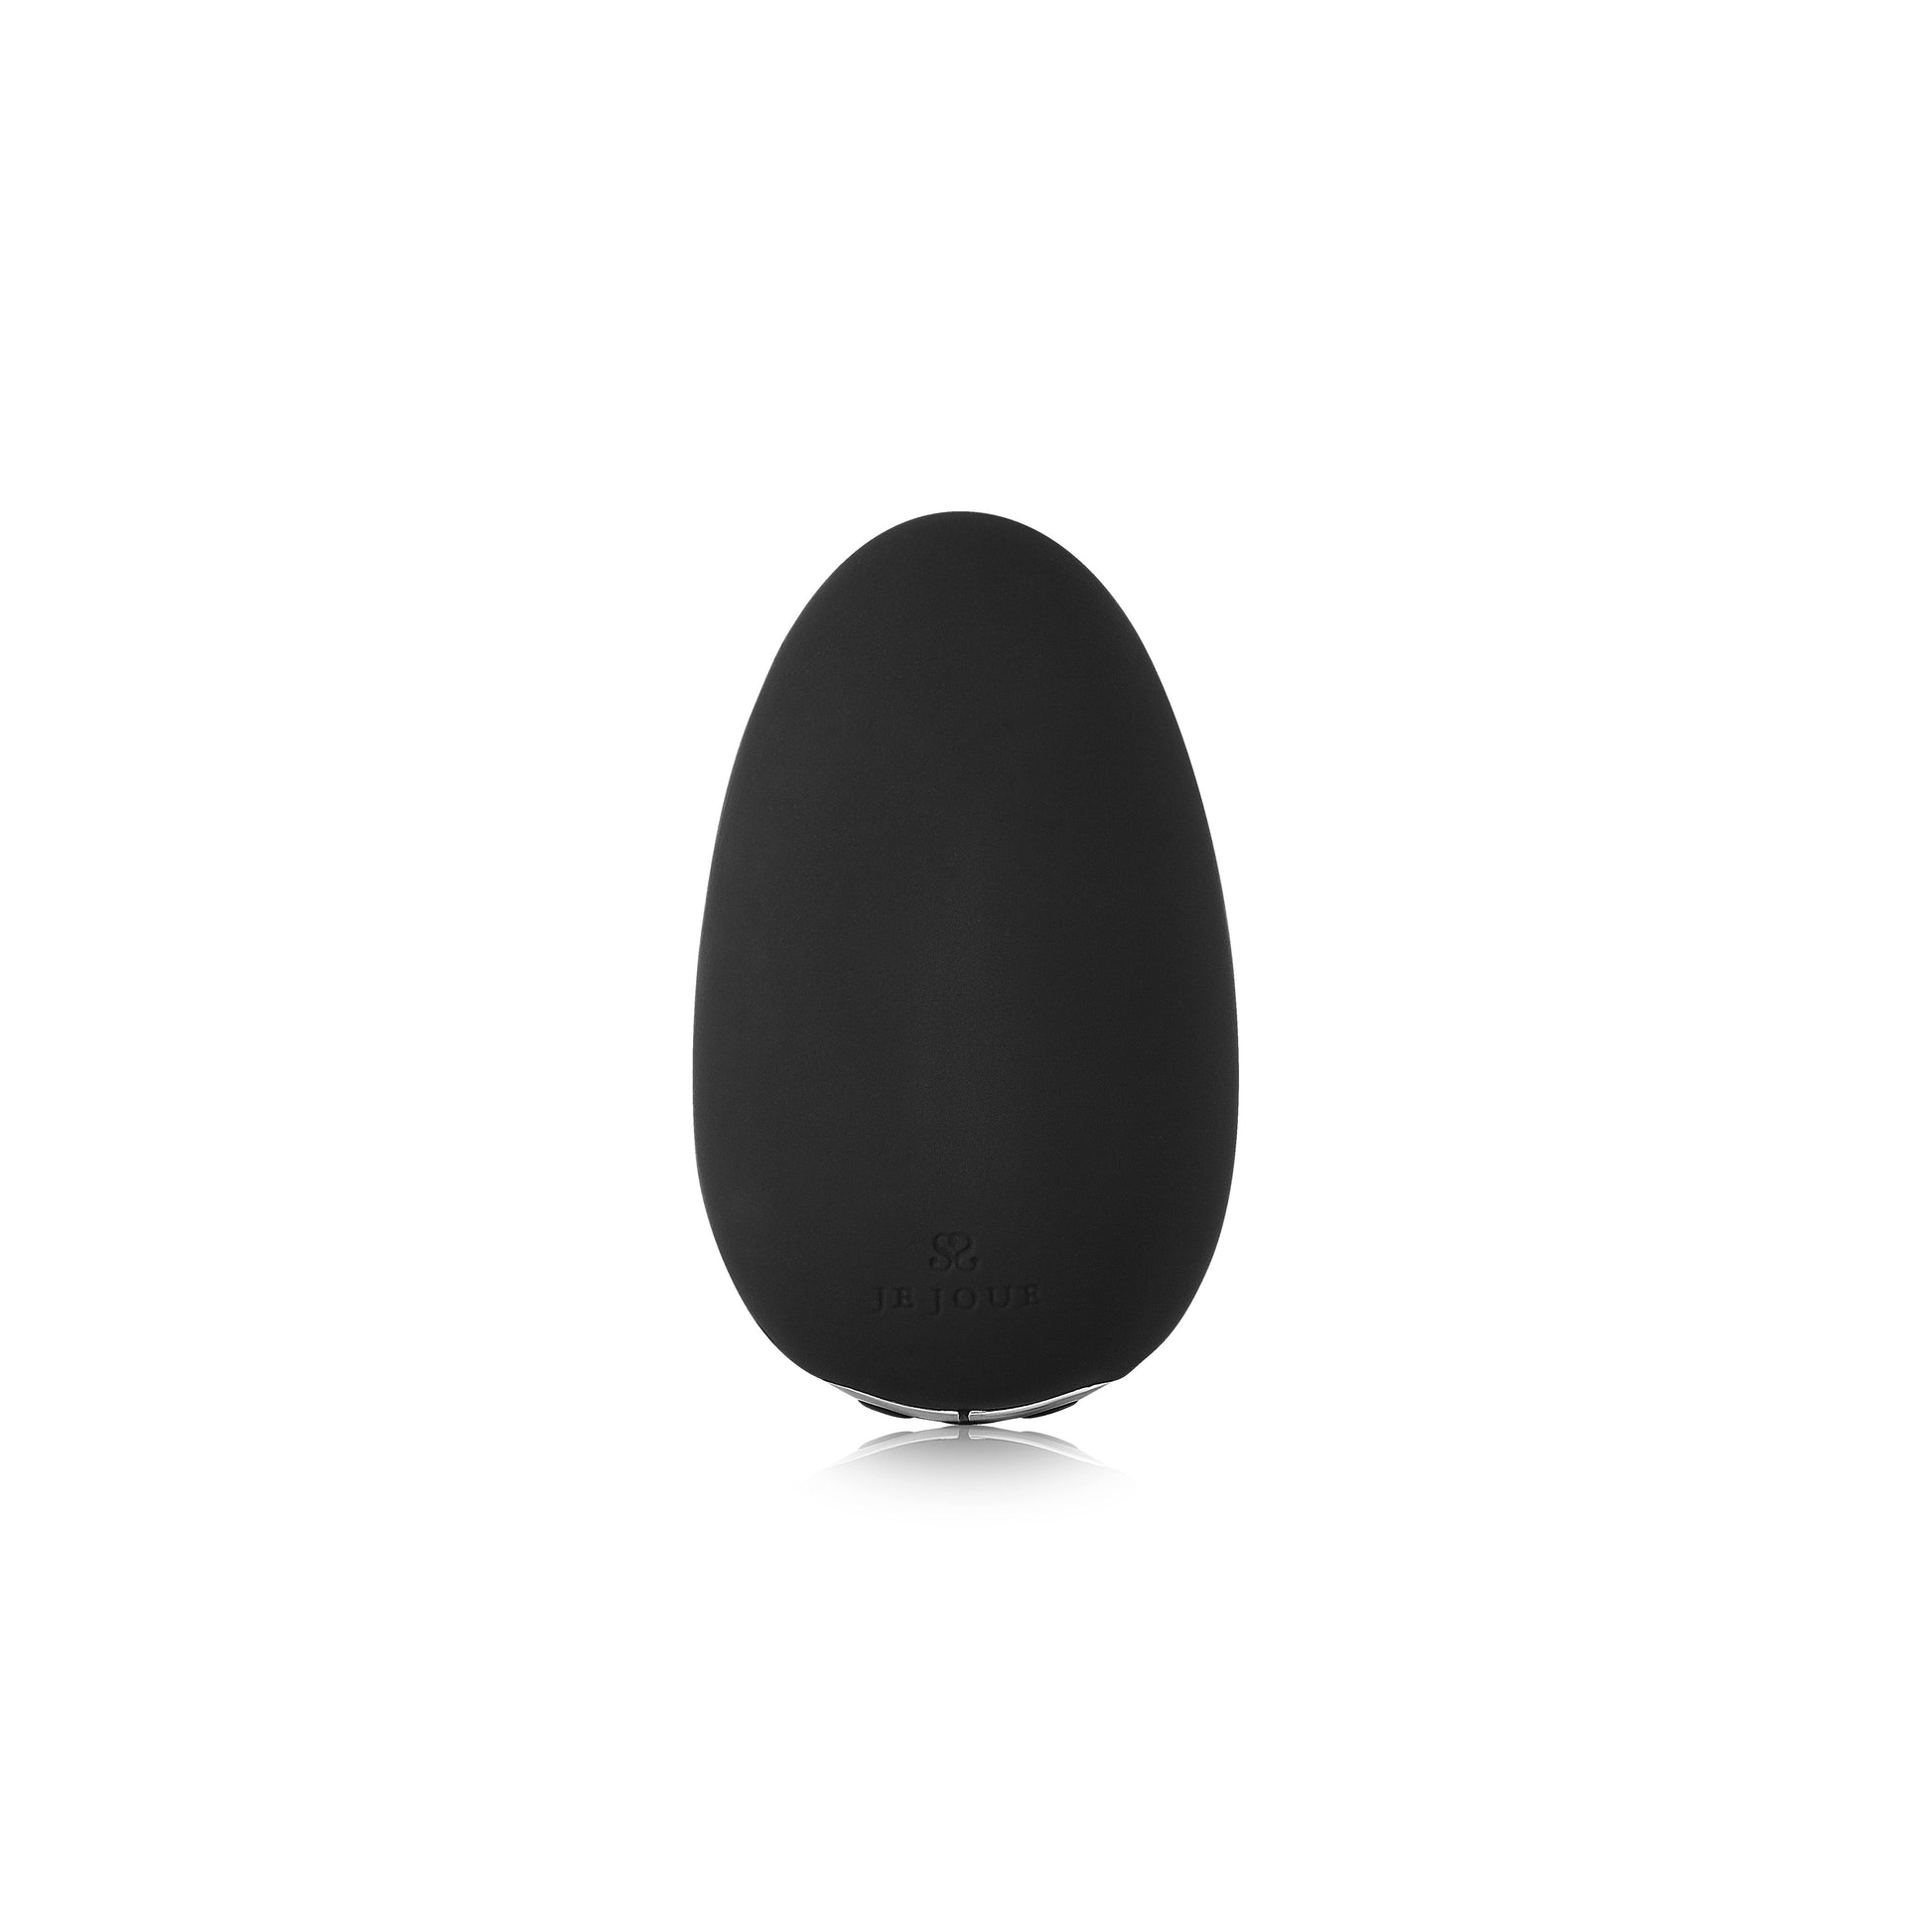 Black Mimi Soft Vibrator front view on white background